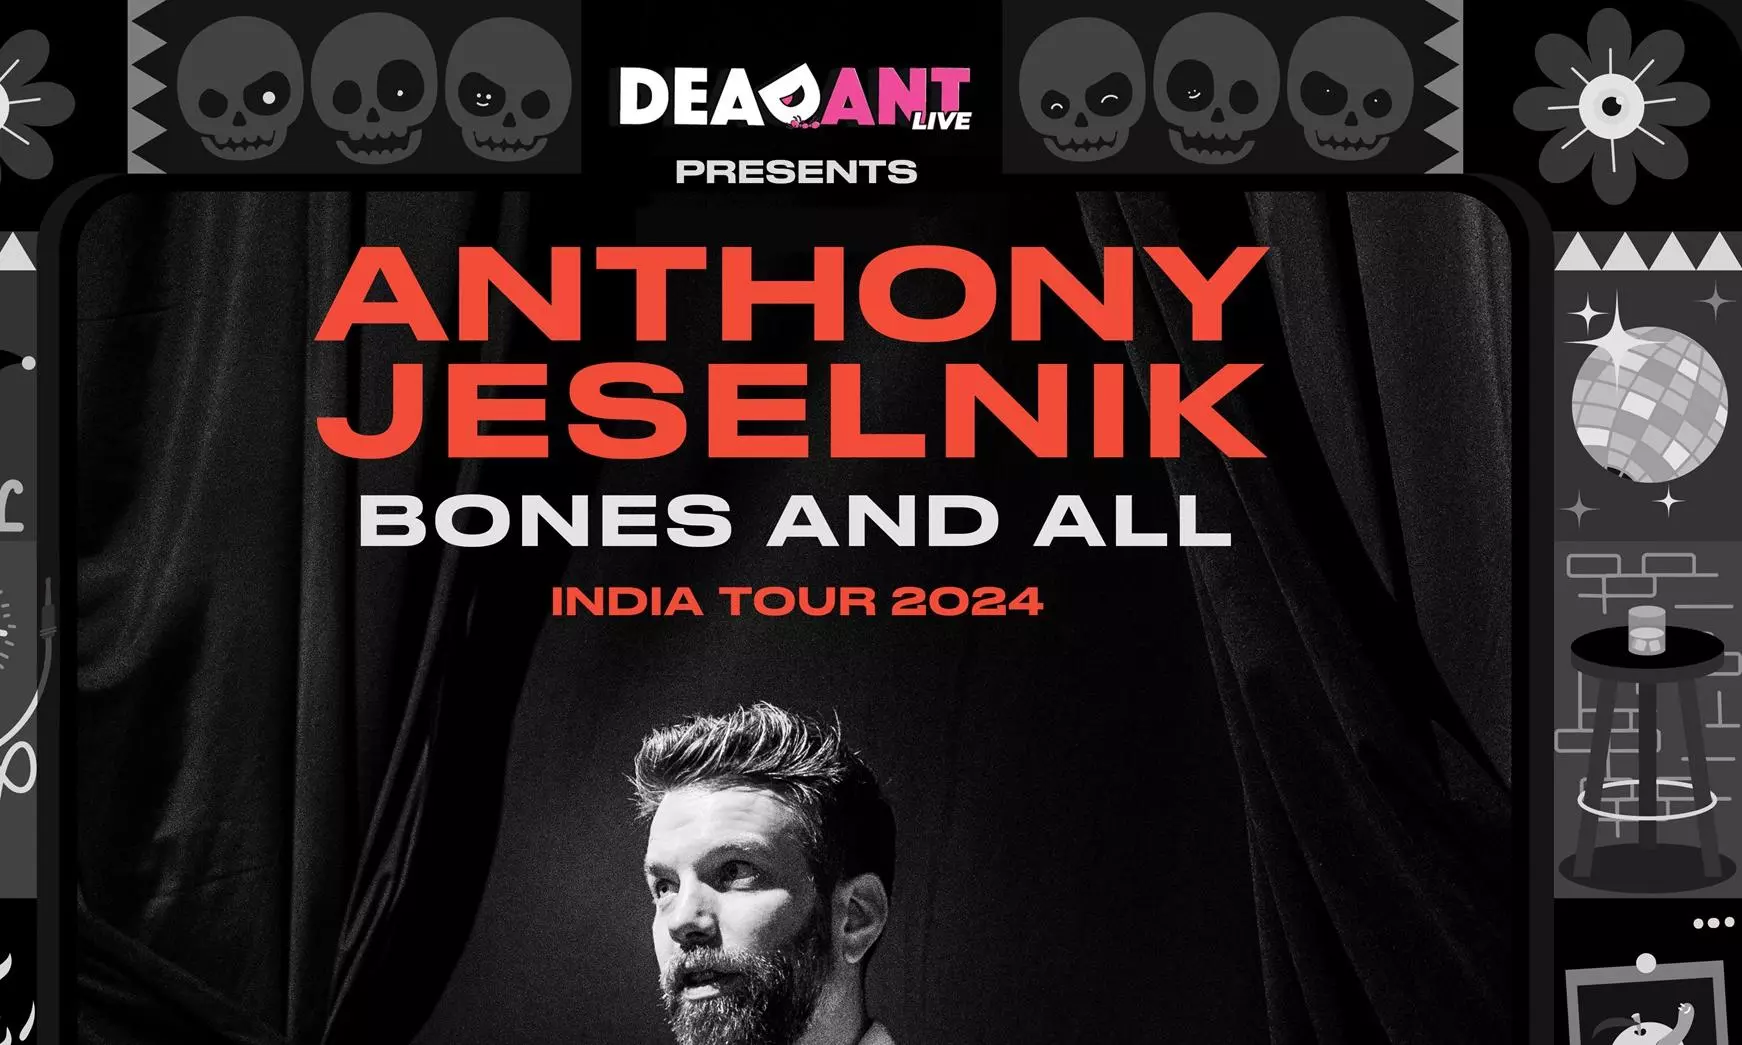 DeadAnt Live announces Anthony Jeselnik’s  debut tour in India